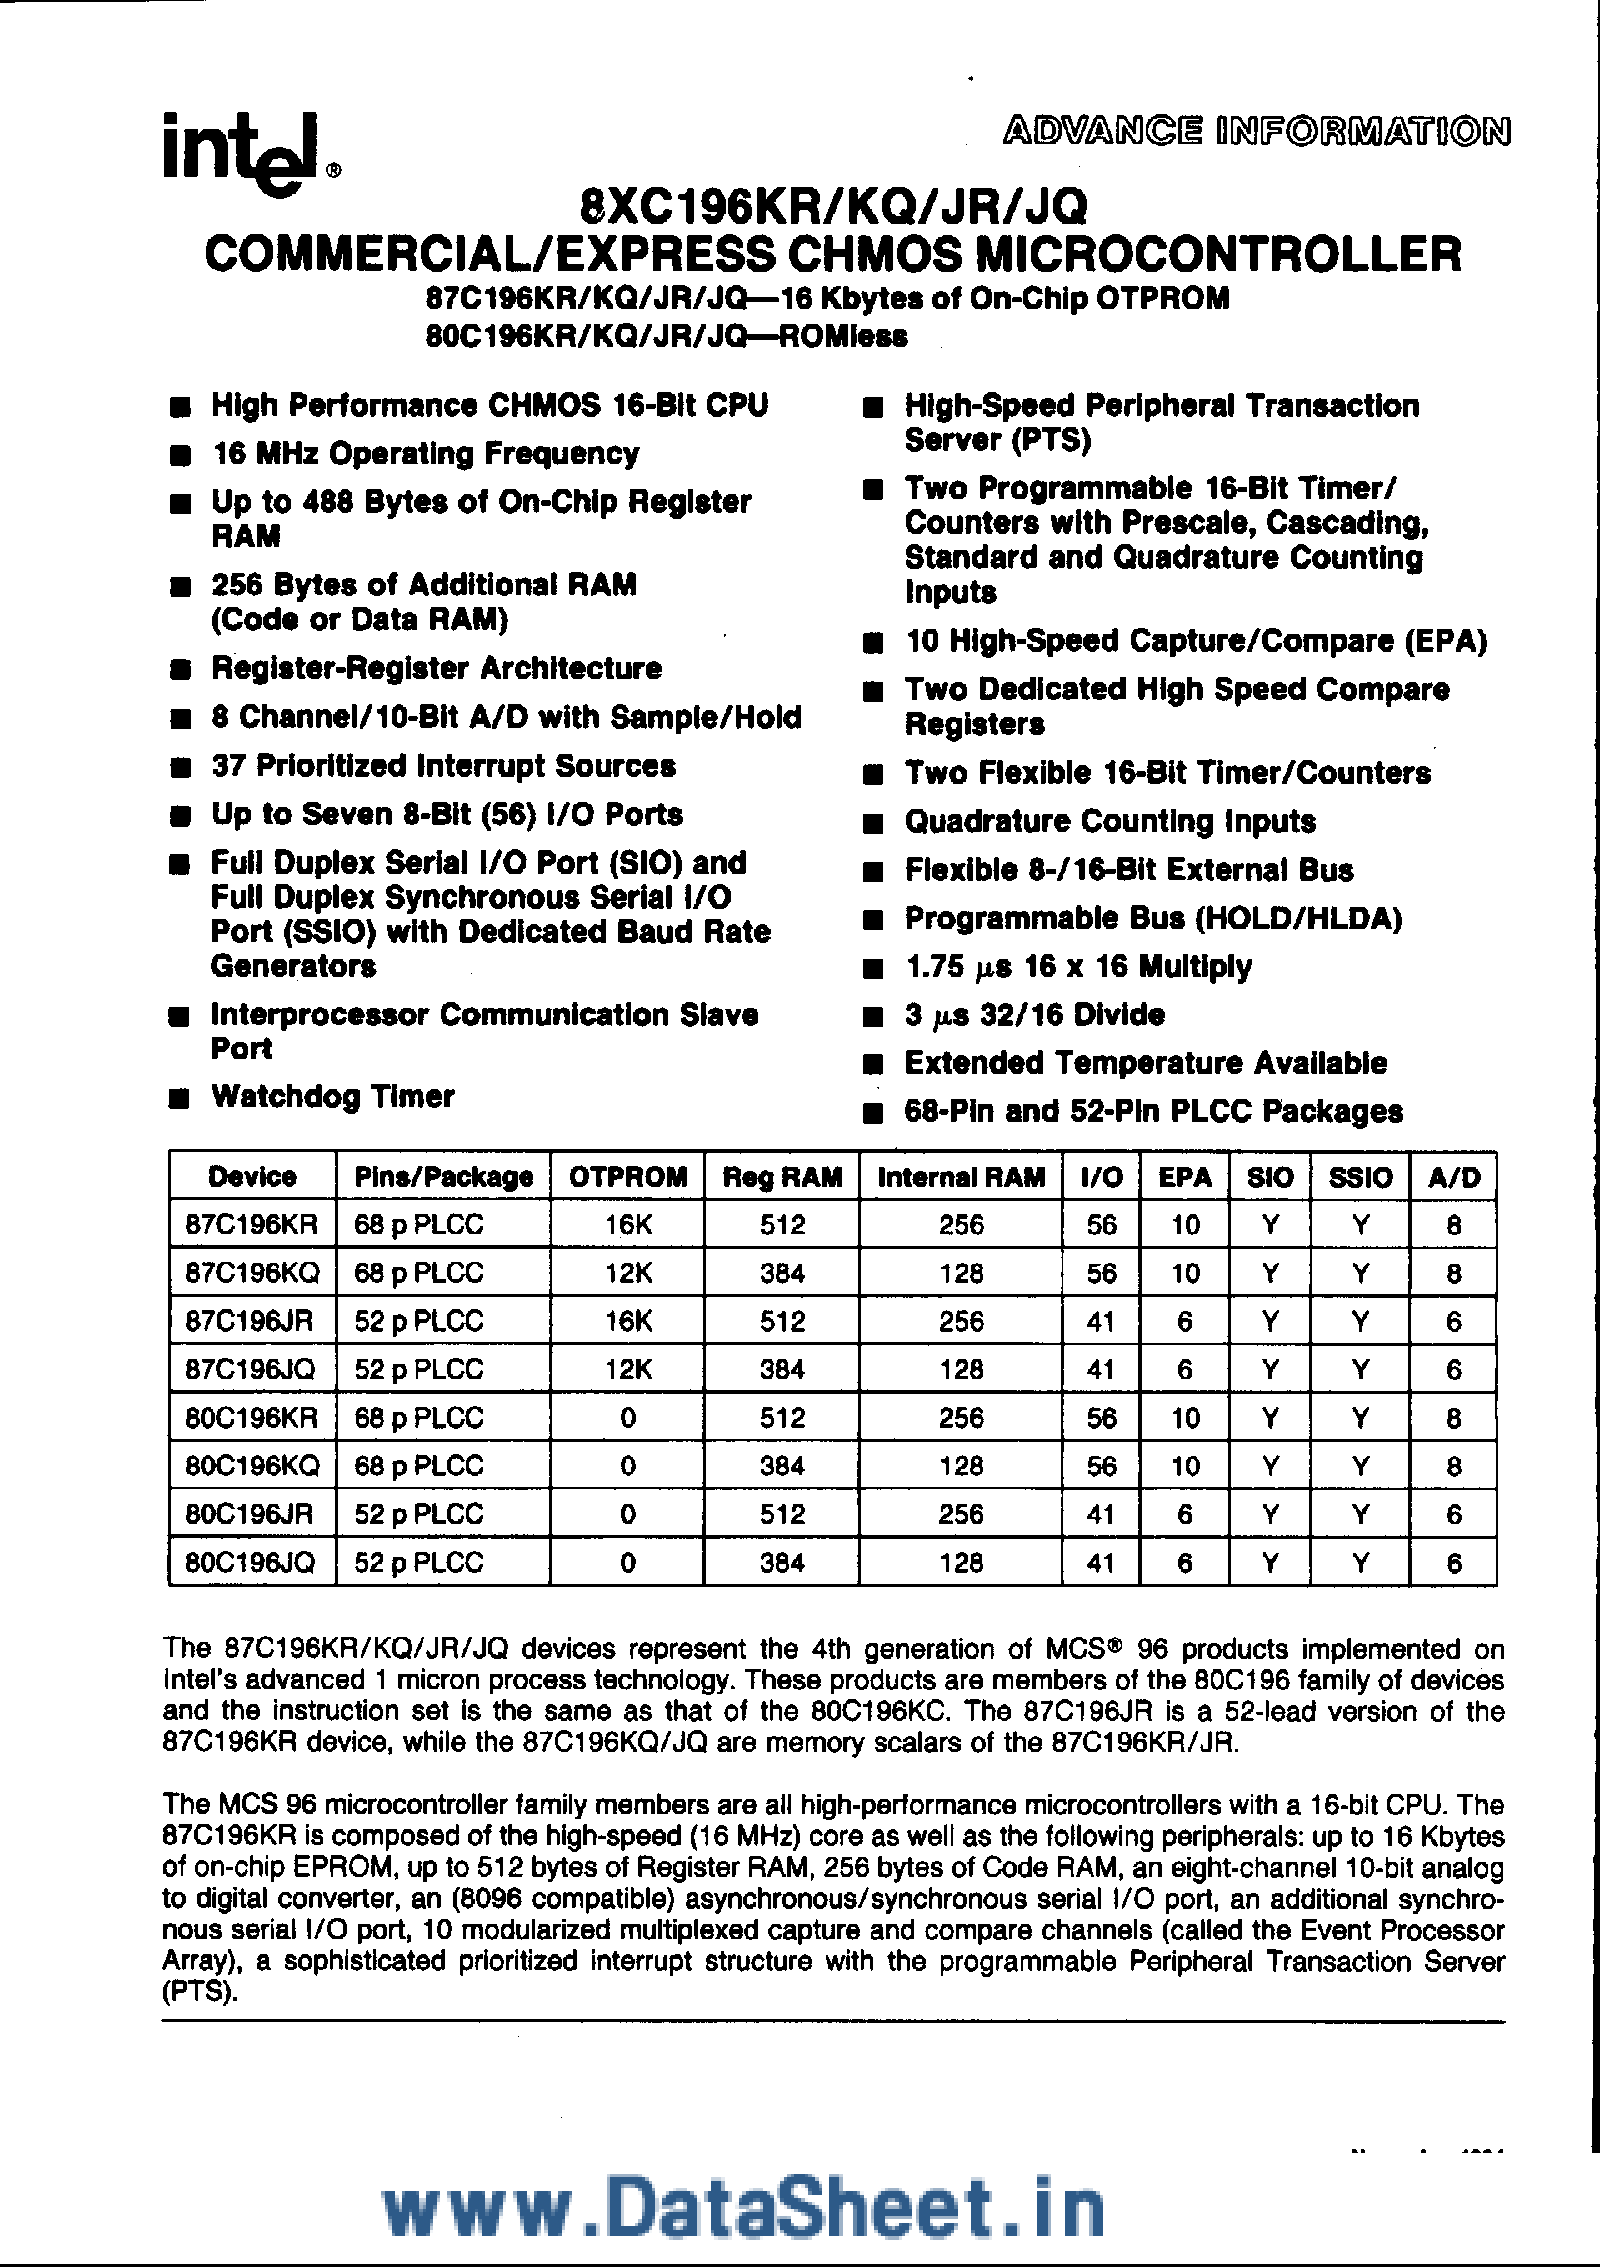 Datasheet TN87C196JQ - (TN87C196KR/Q/JR/JQ) Commercial / Express CHMOS Microcontroller page 1